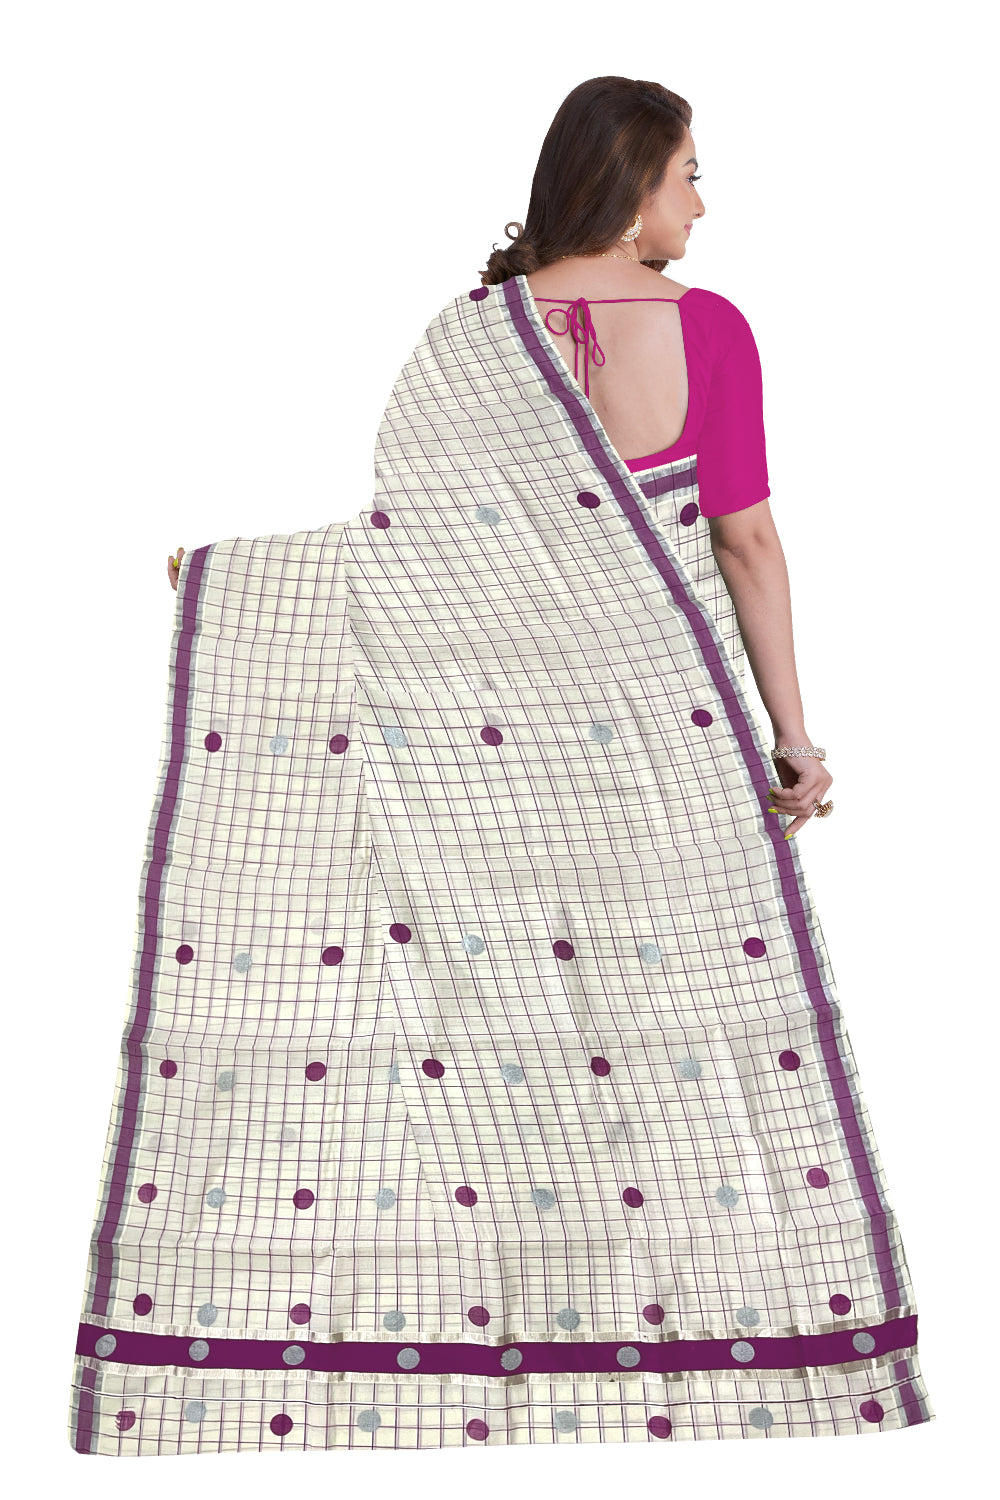 Kerala Pure Cotton Check Designs Saree with Silver and Magenta Polka Prints